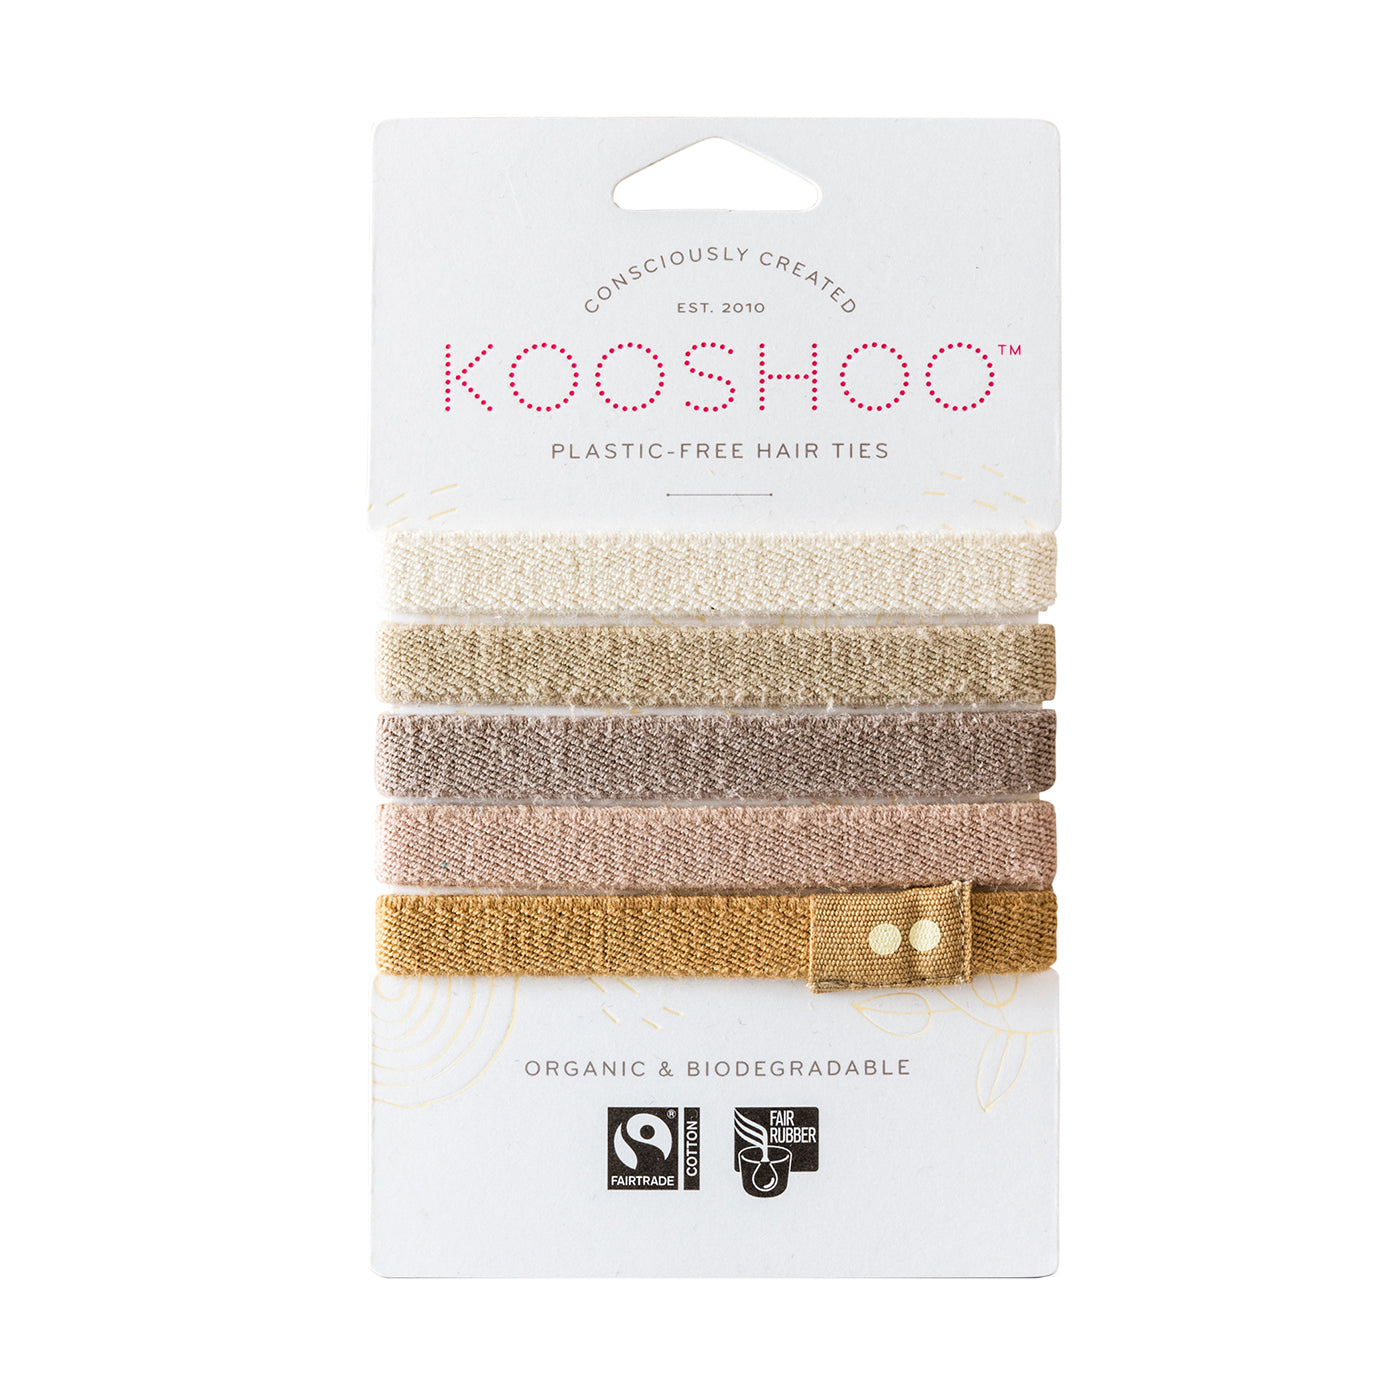 Kooshoo Plastic Free Organic Cotton Hair Ties - Blond